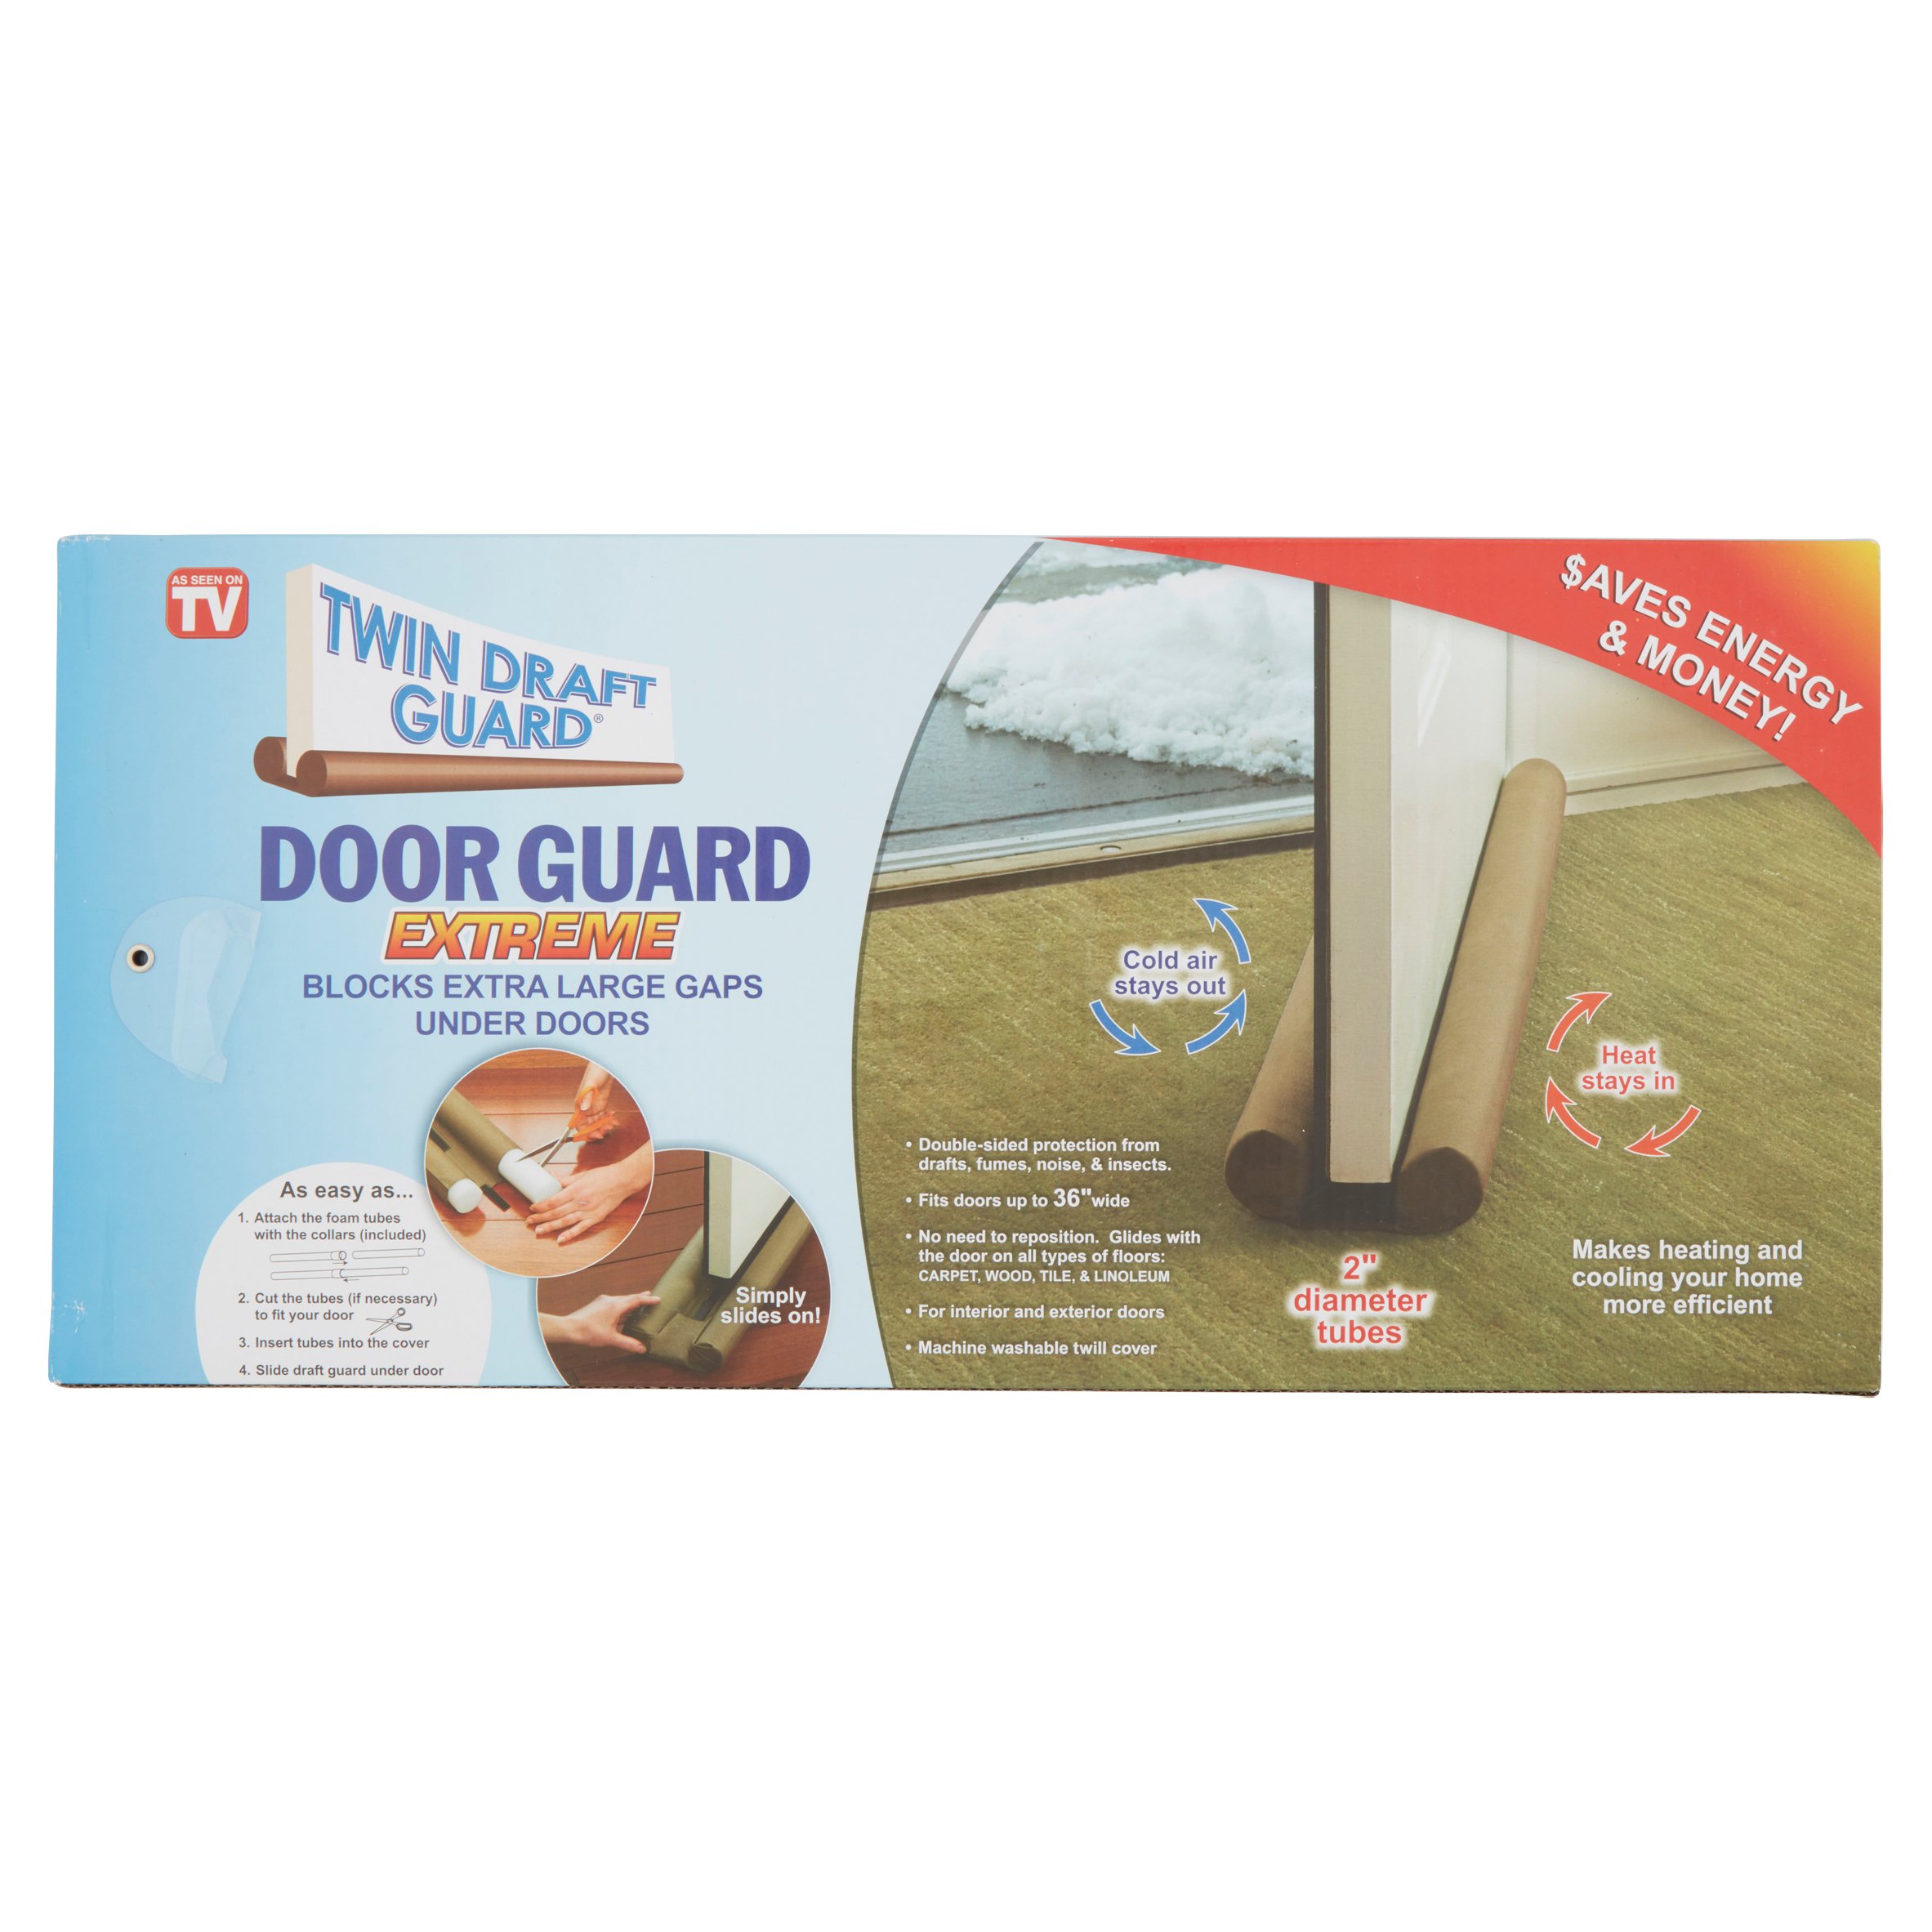 Twin Draft Guard Extreme Door Guard - image 4 of 5